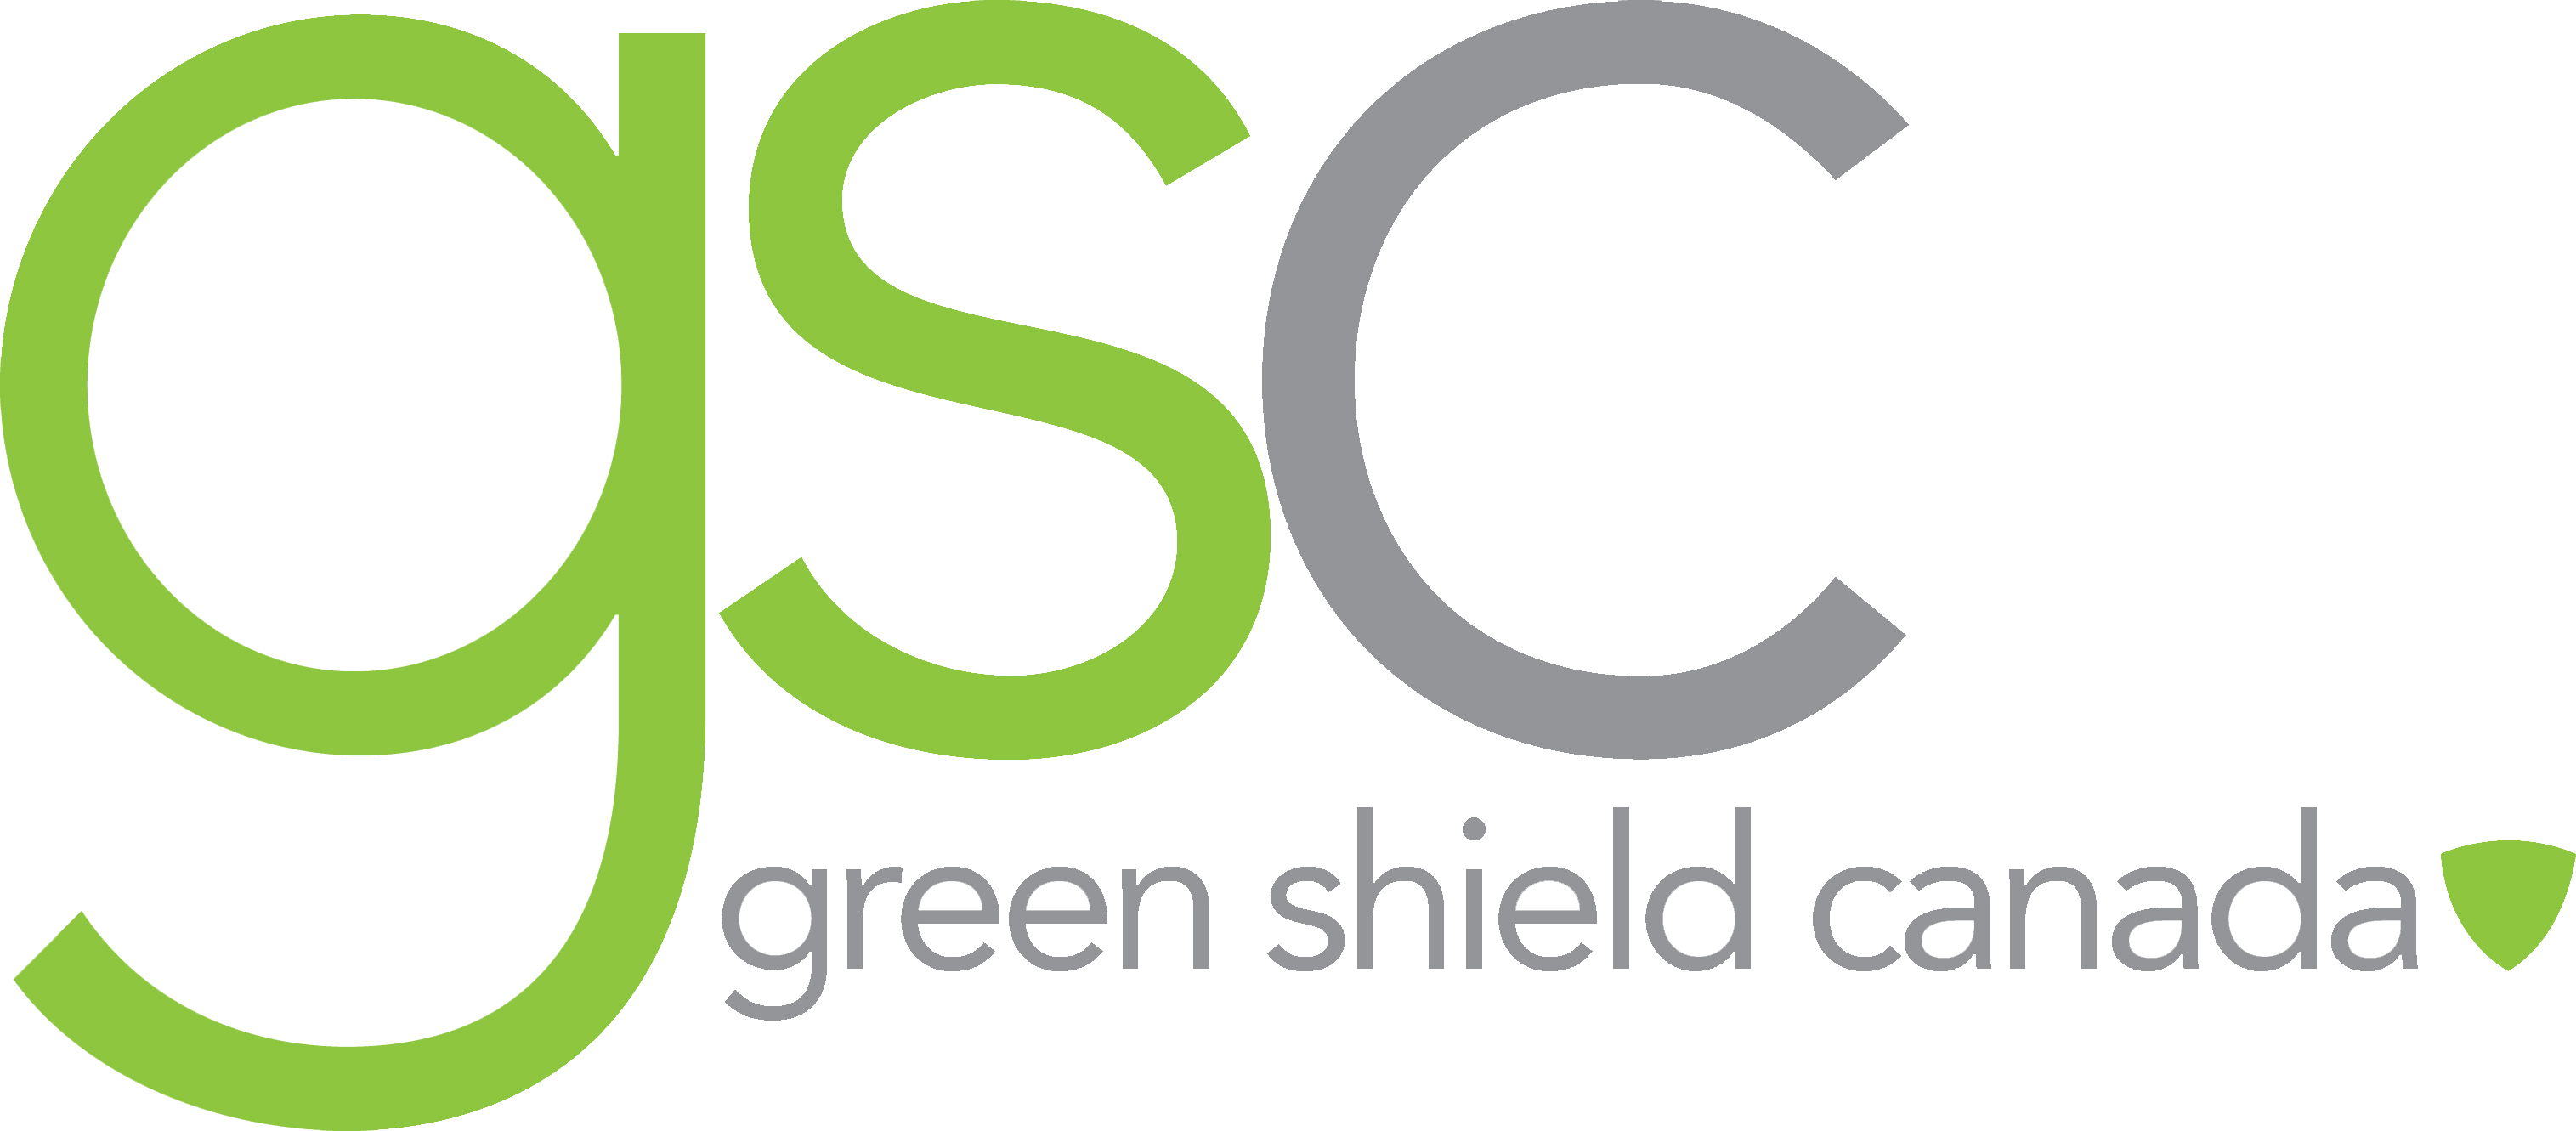 kisspng-green-shield-canada-insurance-logo-clip-art-brand-5bfb3b613e7755.7959512915431913932559  - GenXys